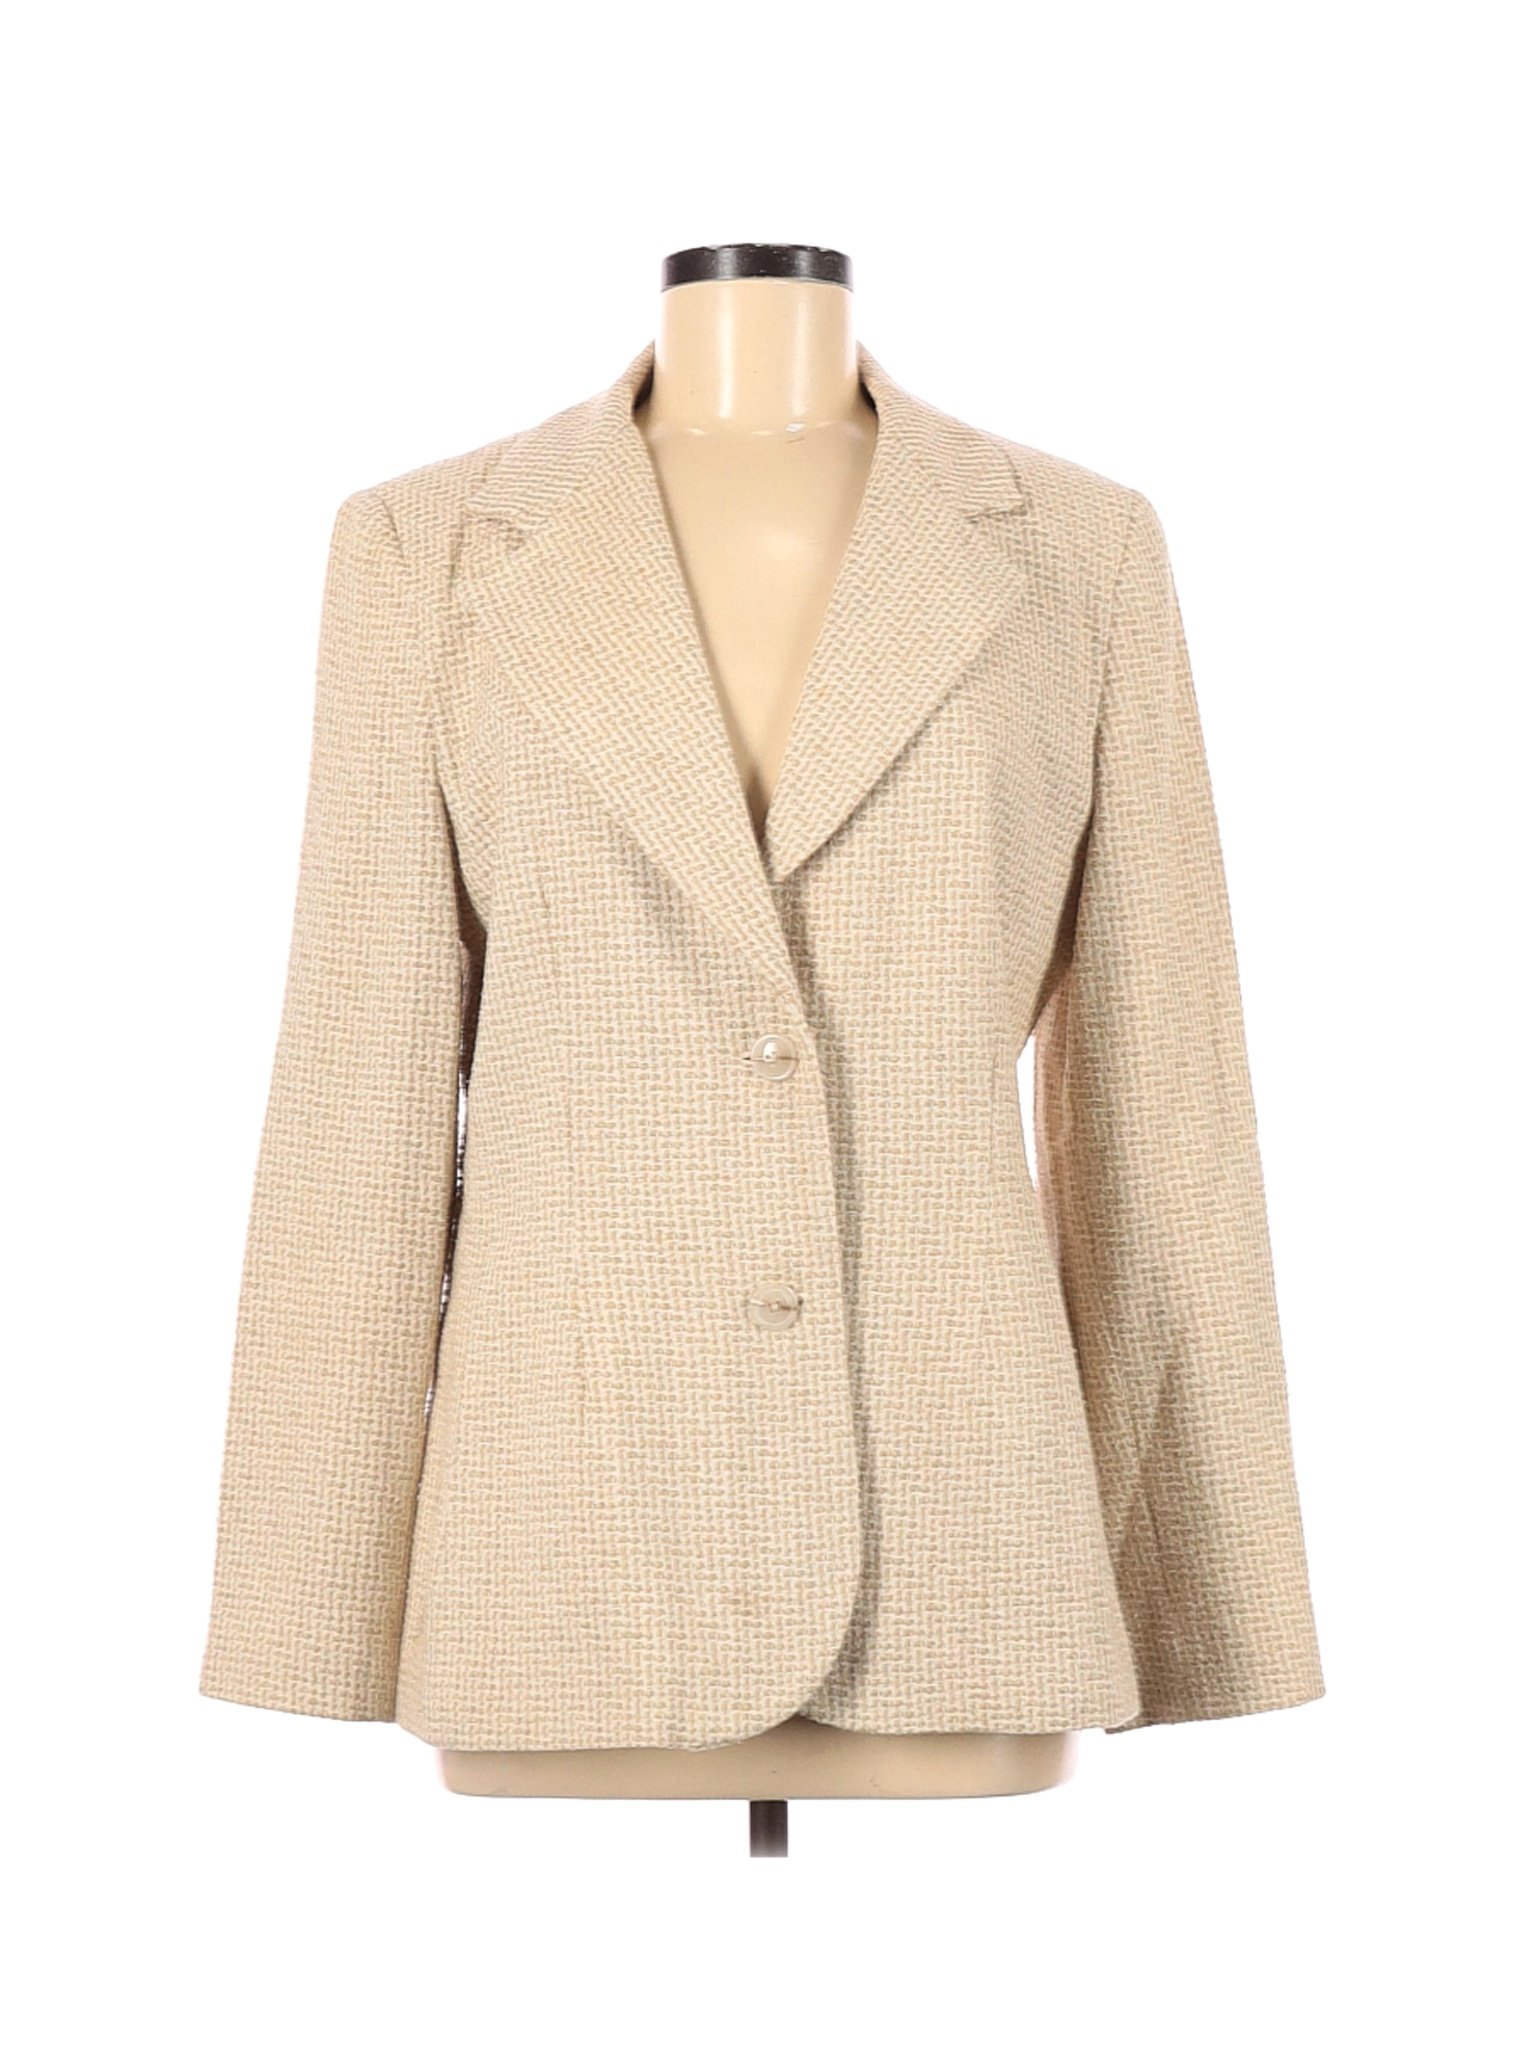 Barrie Pace Women Brown Silk Blazer 8 | eBay